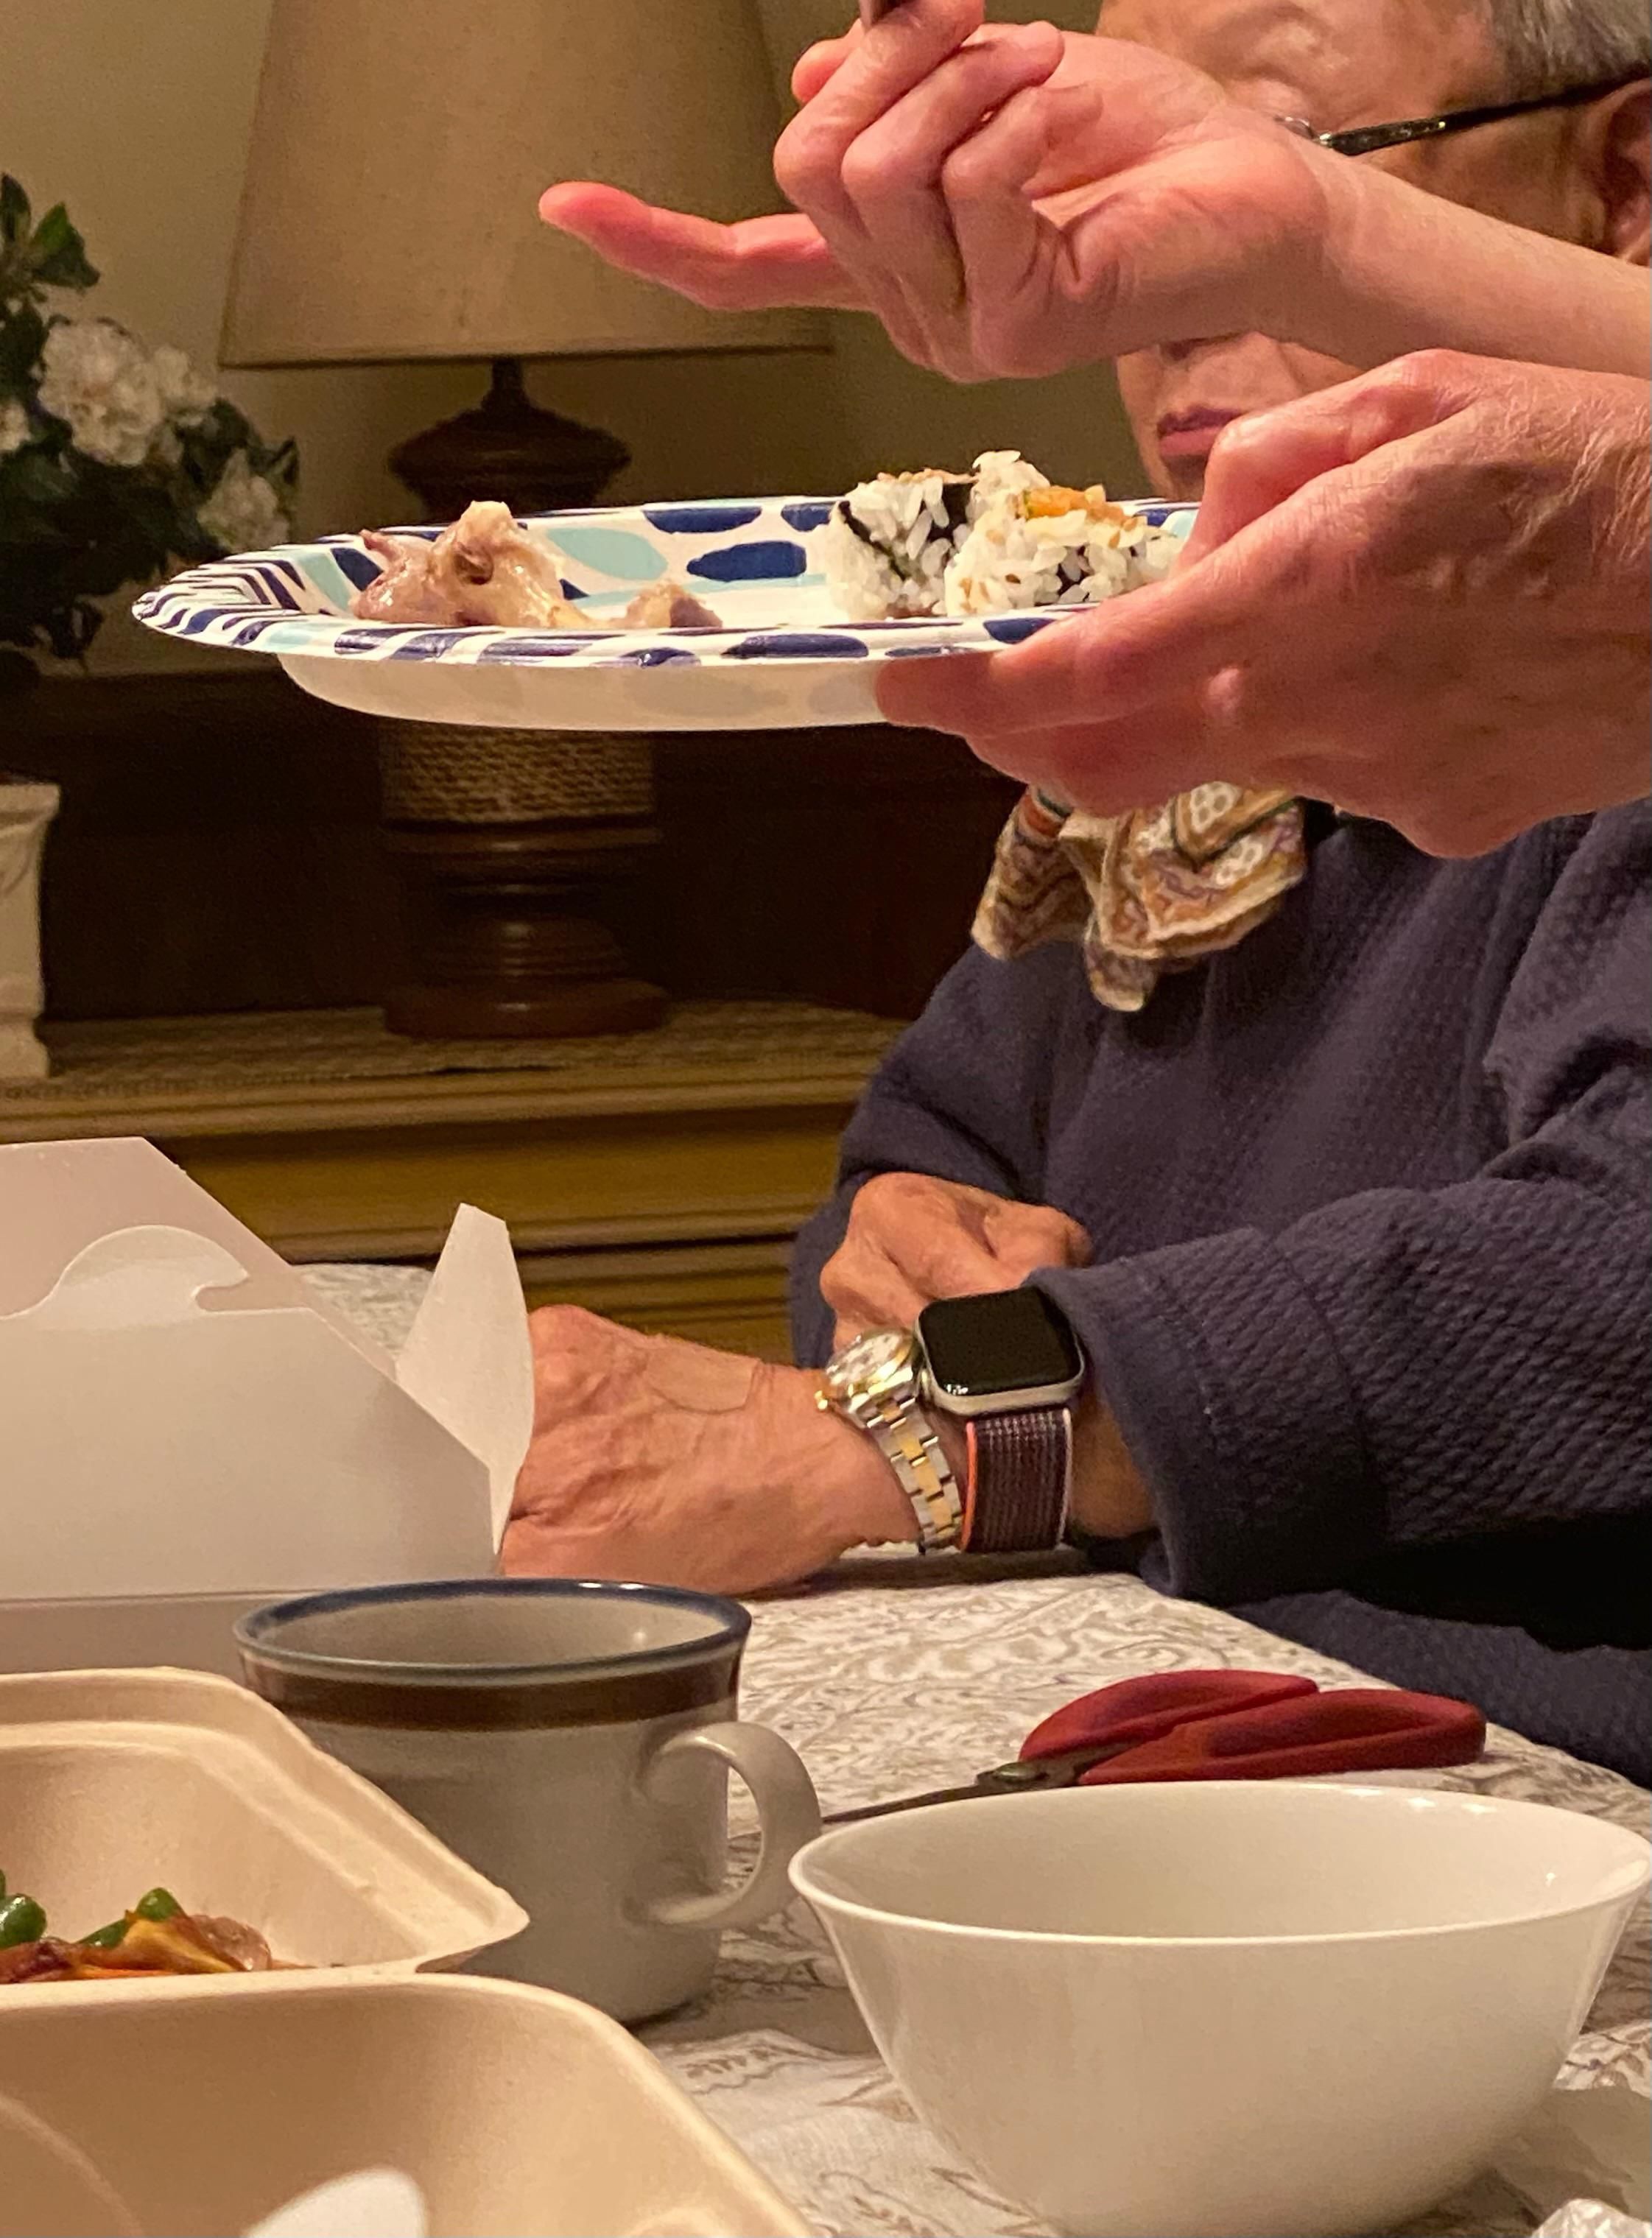 Grandma got an Apple watch but still insistent on sporting the Rolex.